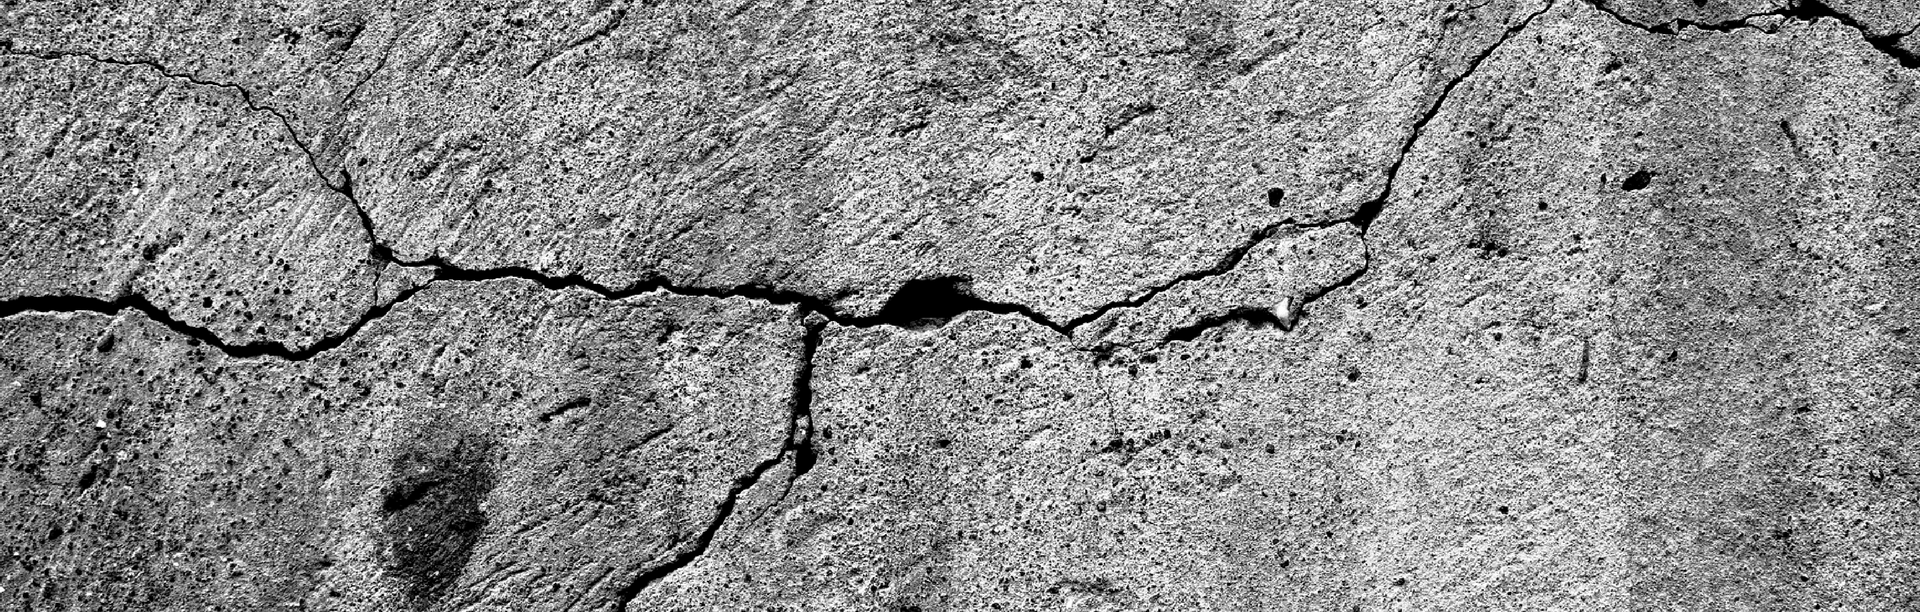  Foundation Cracks